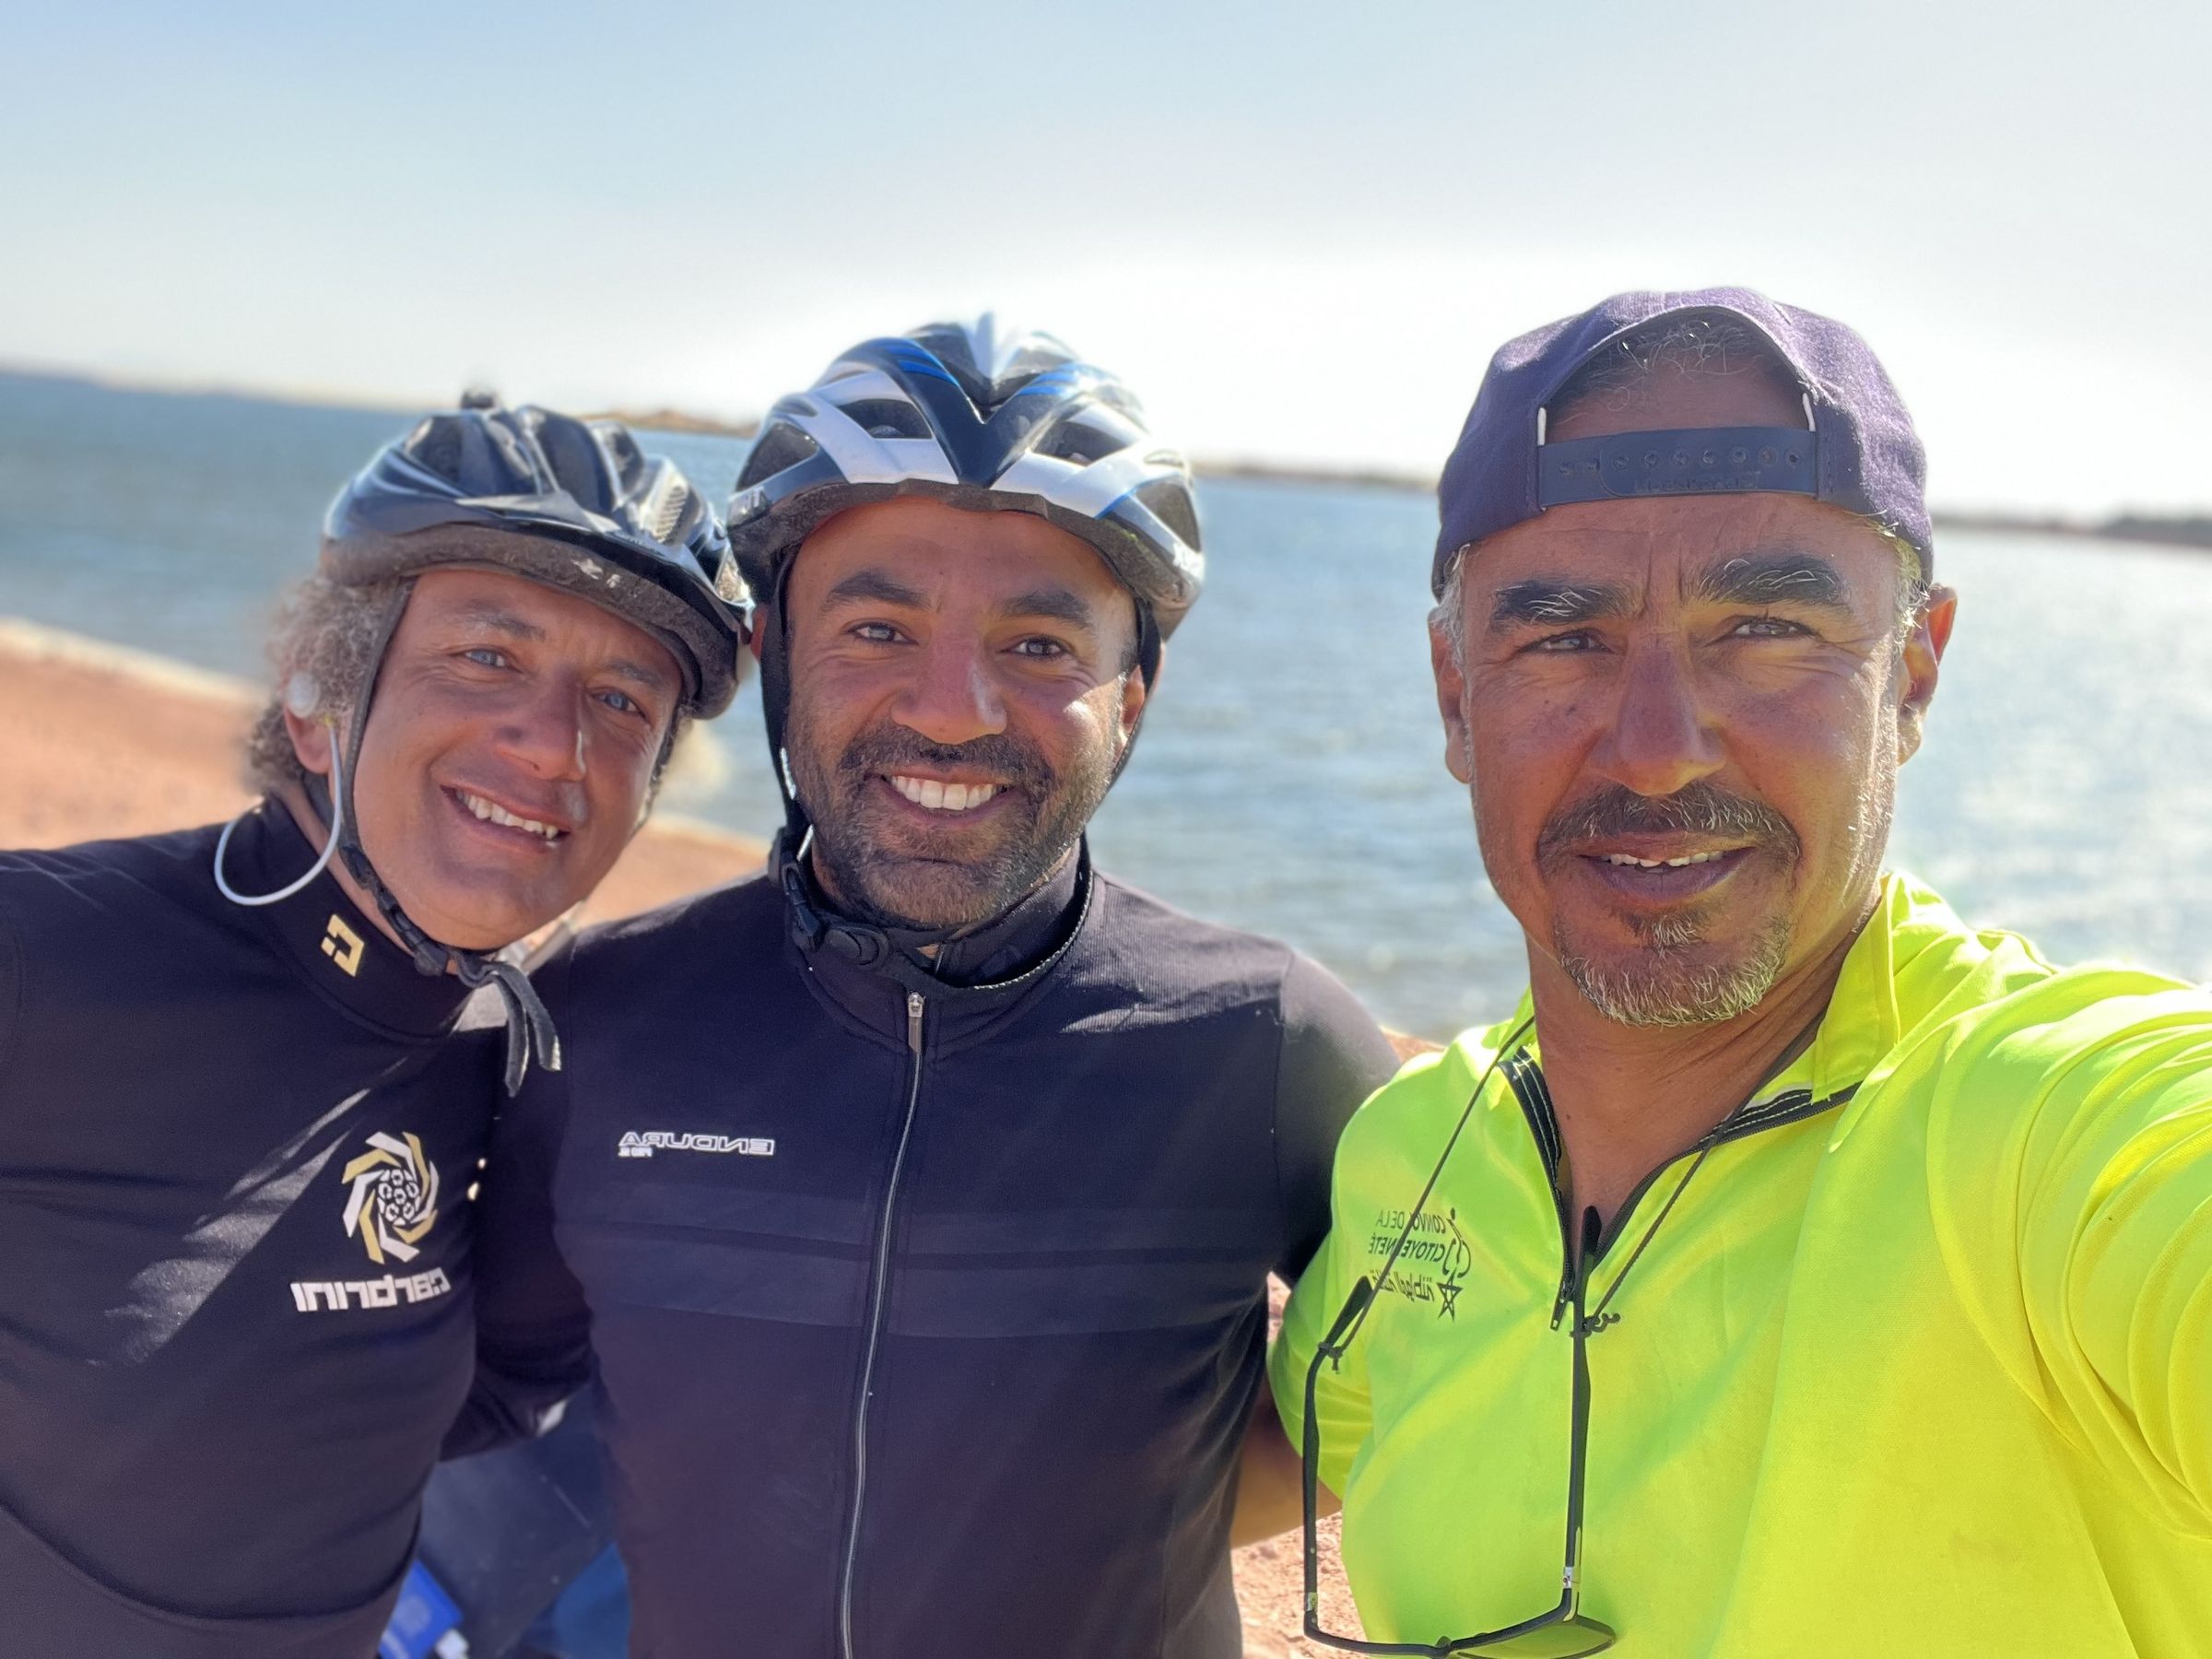 Three cycling friends